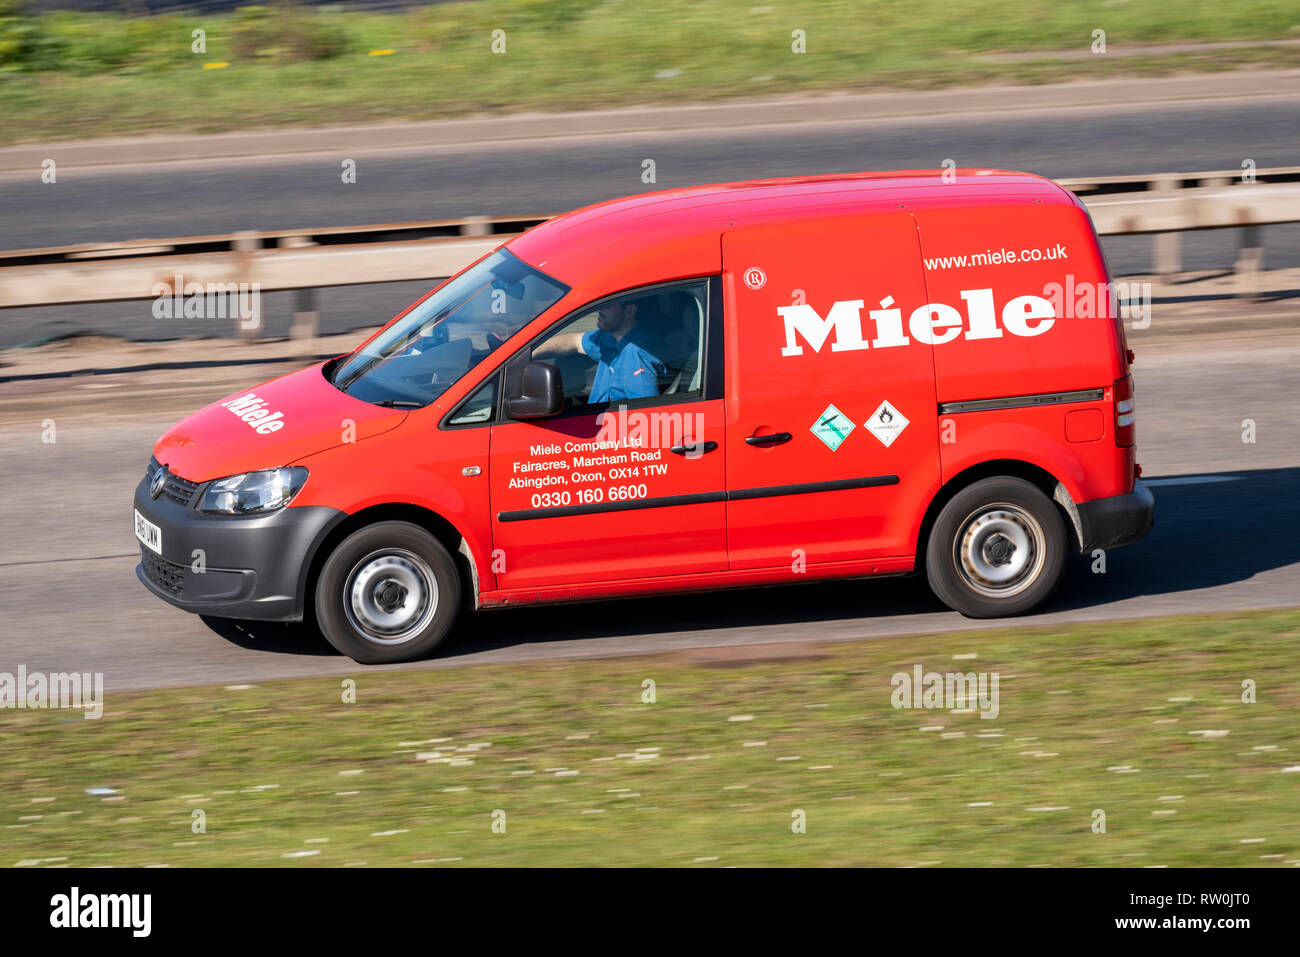 Miele company ltd van driving on the road. Commercial vehicle. VW van Stock Photo